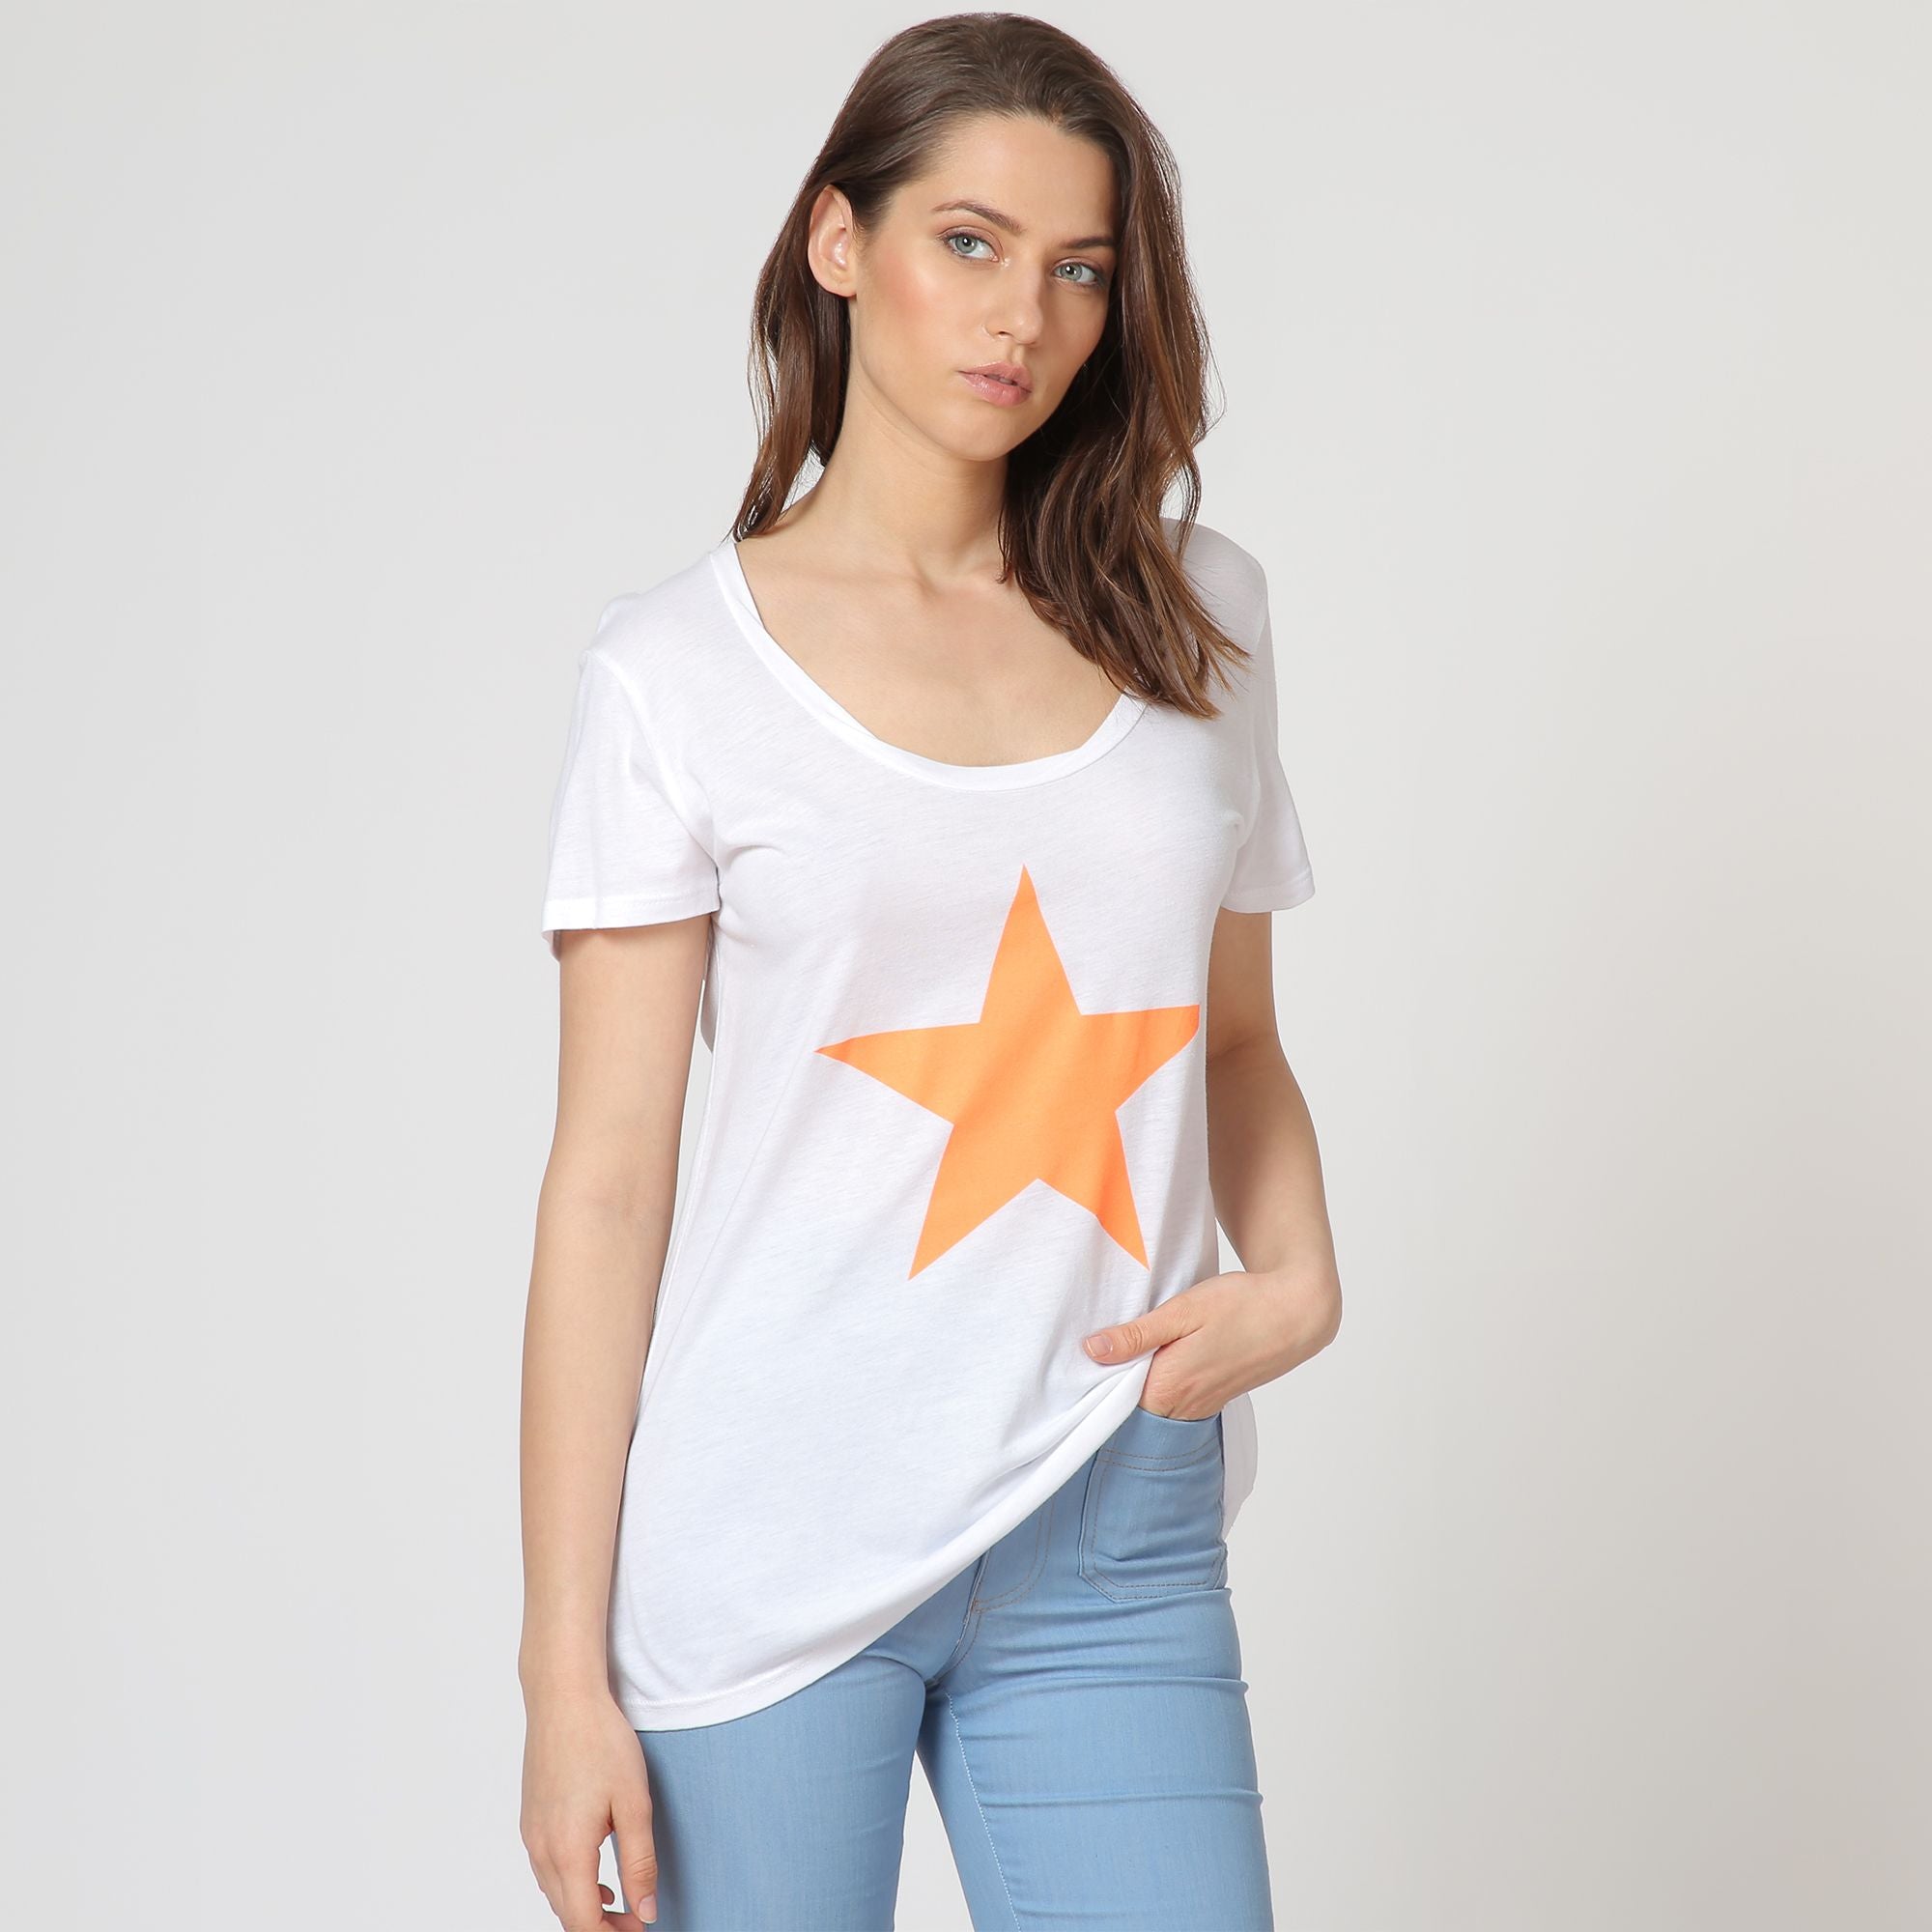 White short sleeve orange star t-shirt